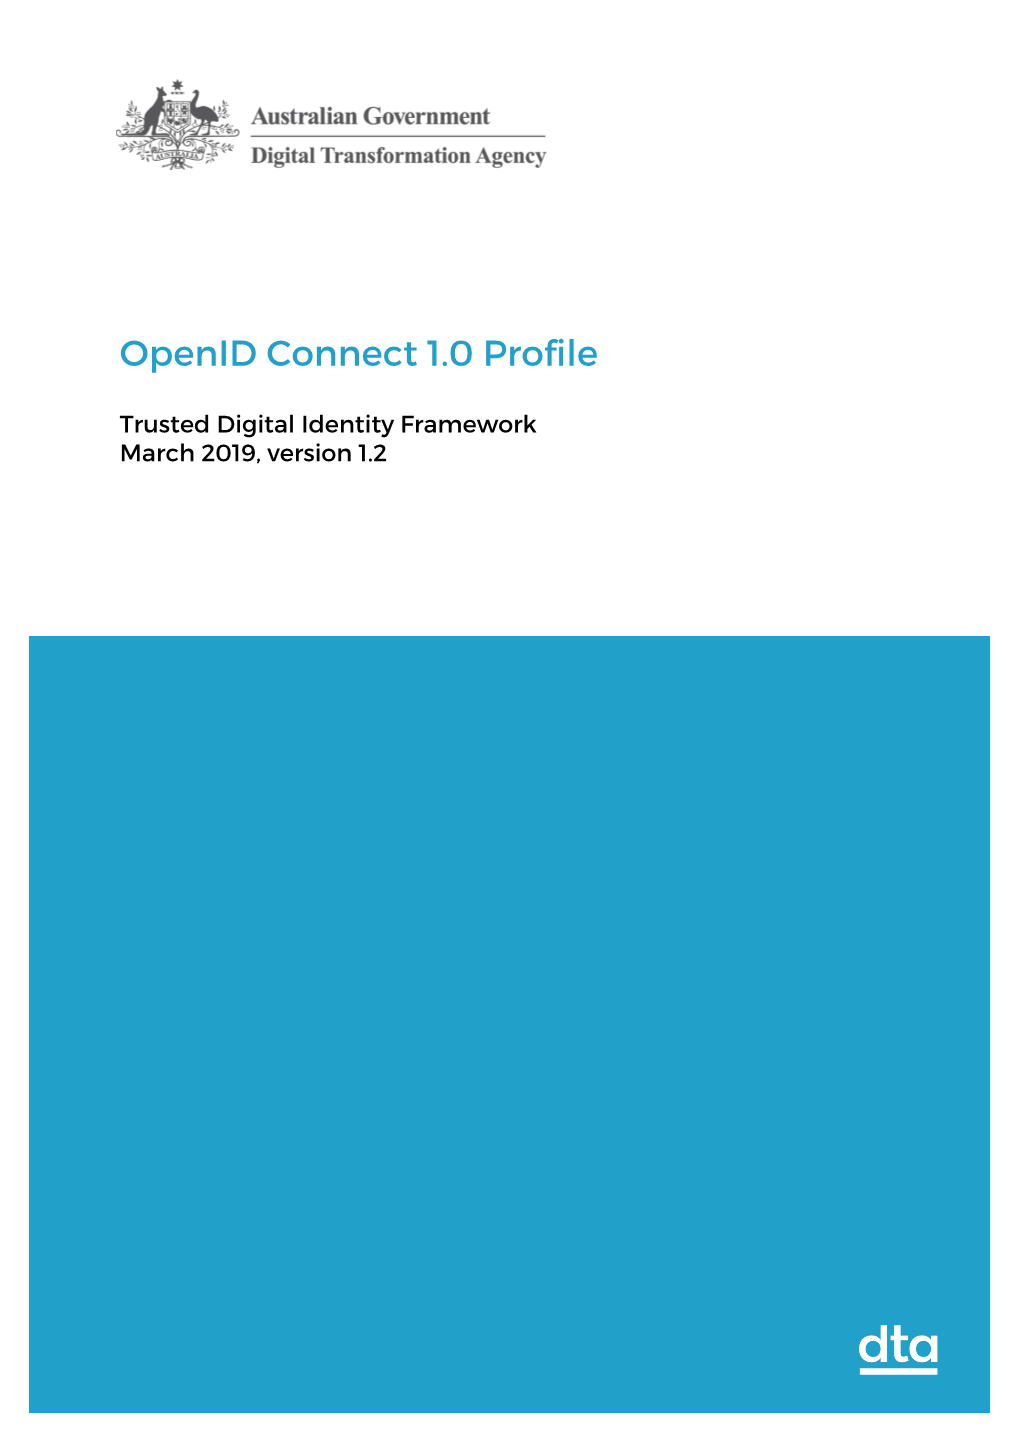 Openid Connect 1.0 Profile